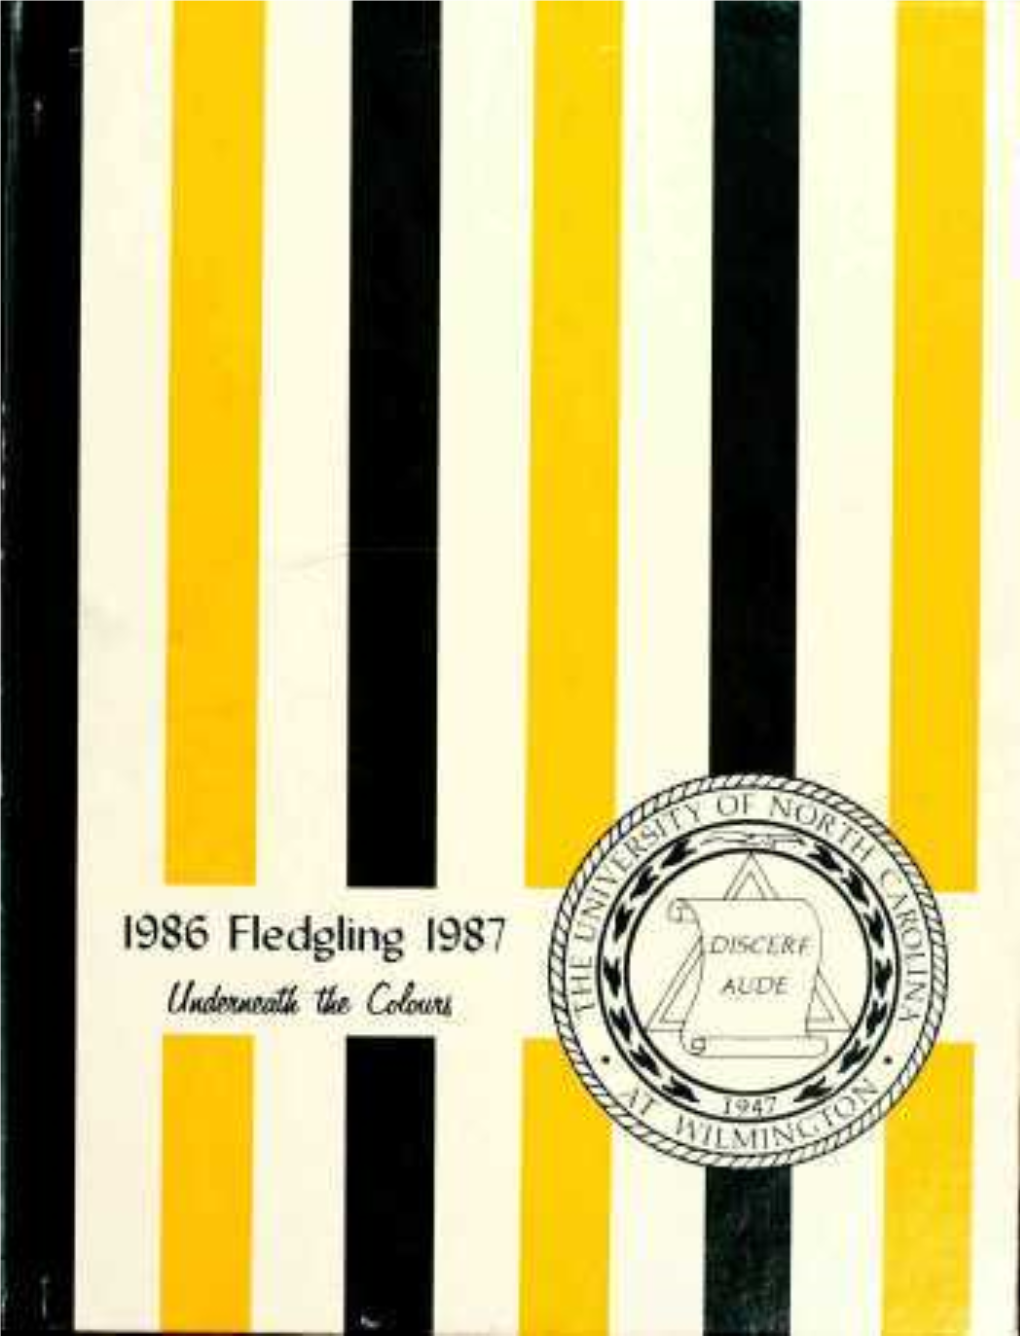 1986 Fledgling 1987